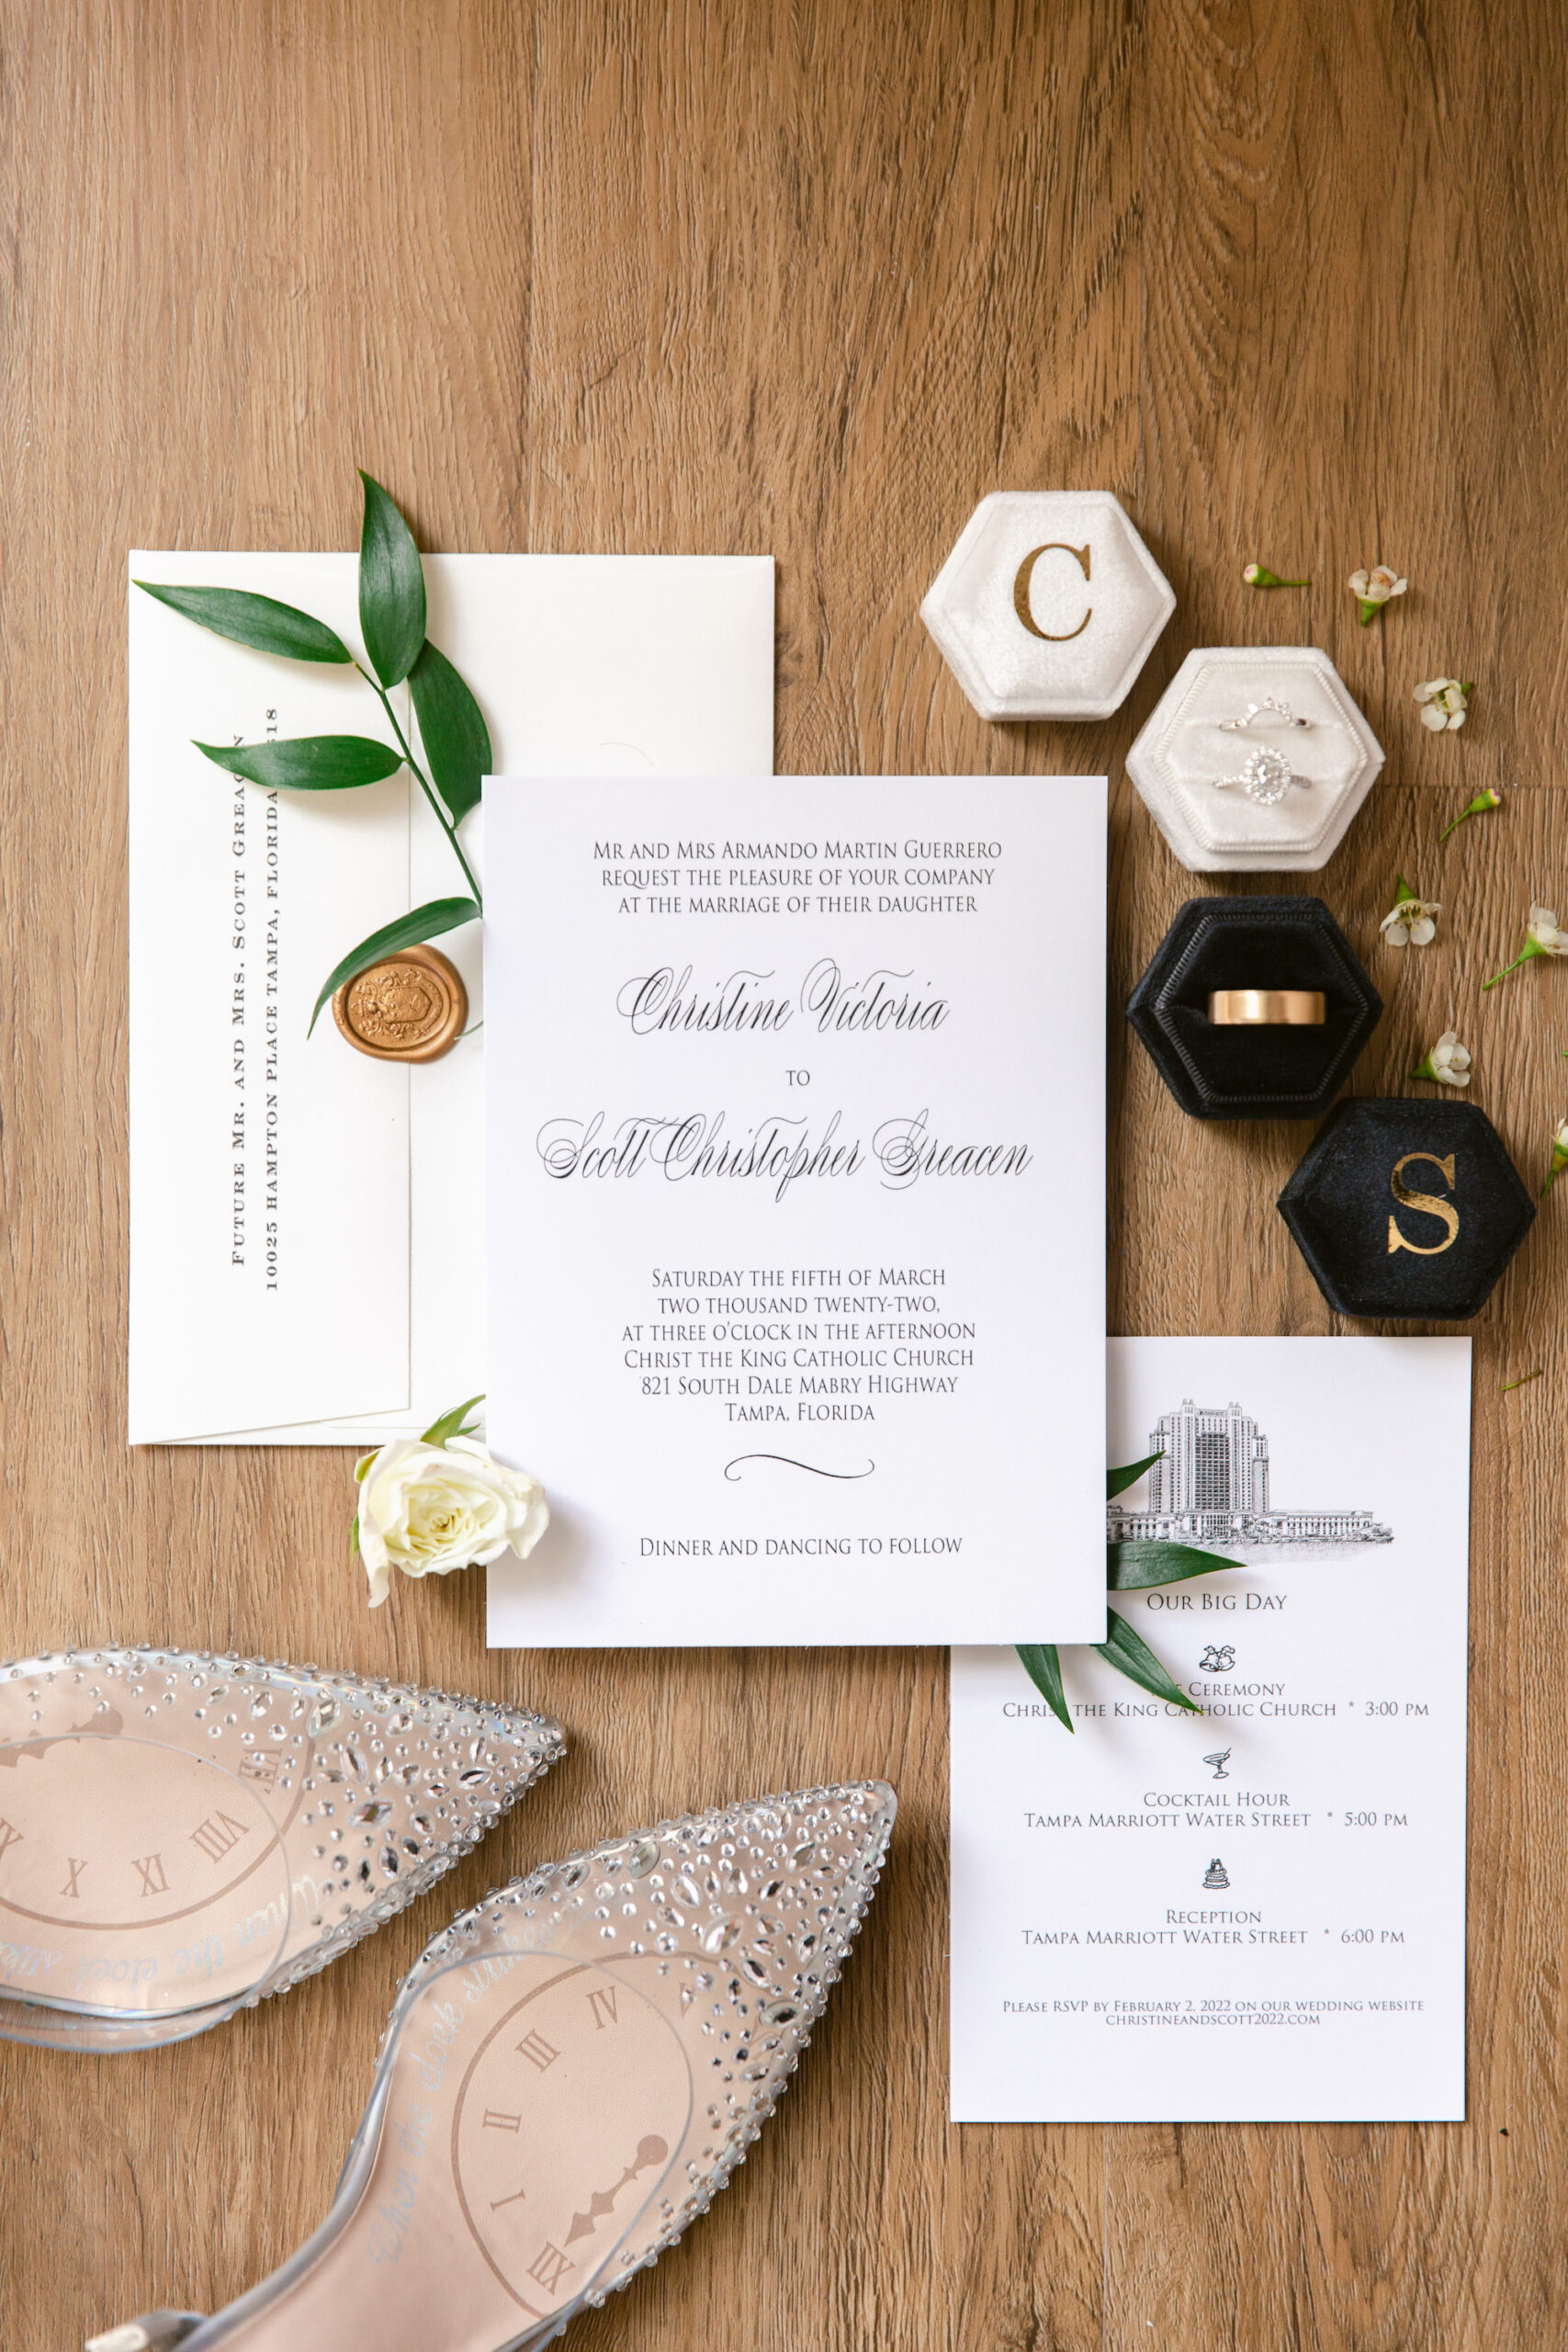 Classic Black and White Wedding Invitation Suite with Sophisticated Lettering, Monogram Hexagon Velvet Ring Box, Aldo Wedding Shoes